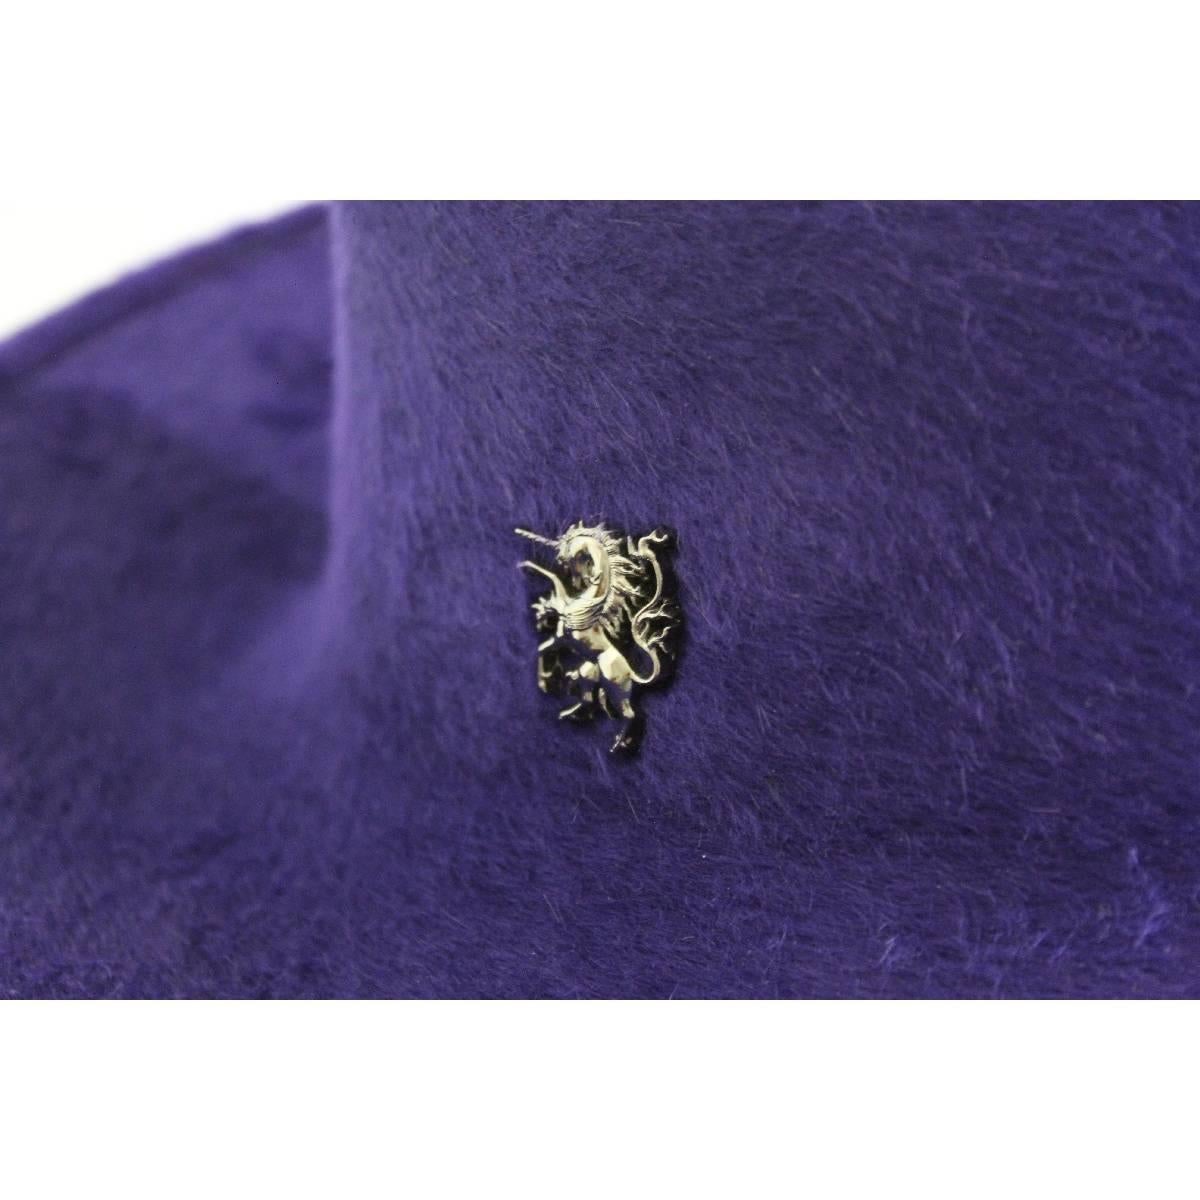 Women's Philip Treacy purple wool felt hat size M made England 